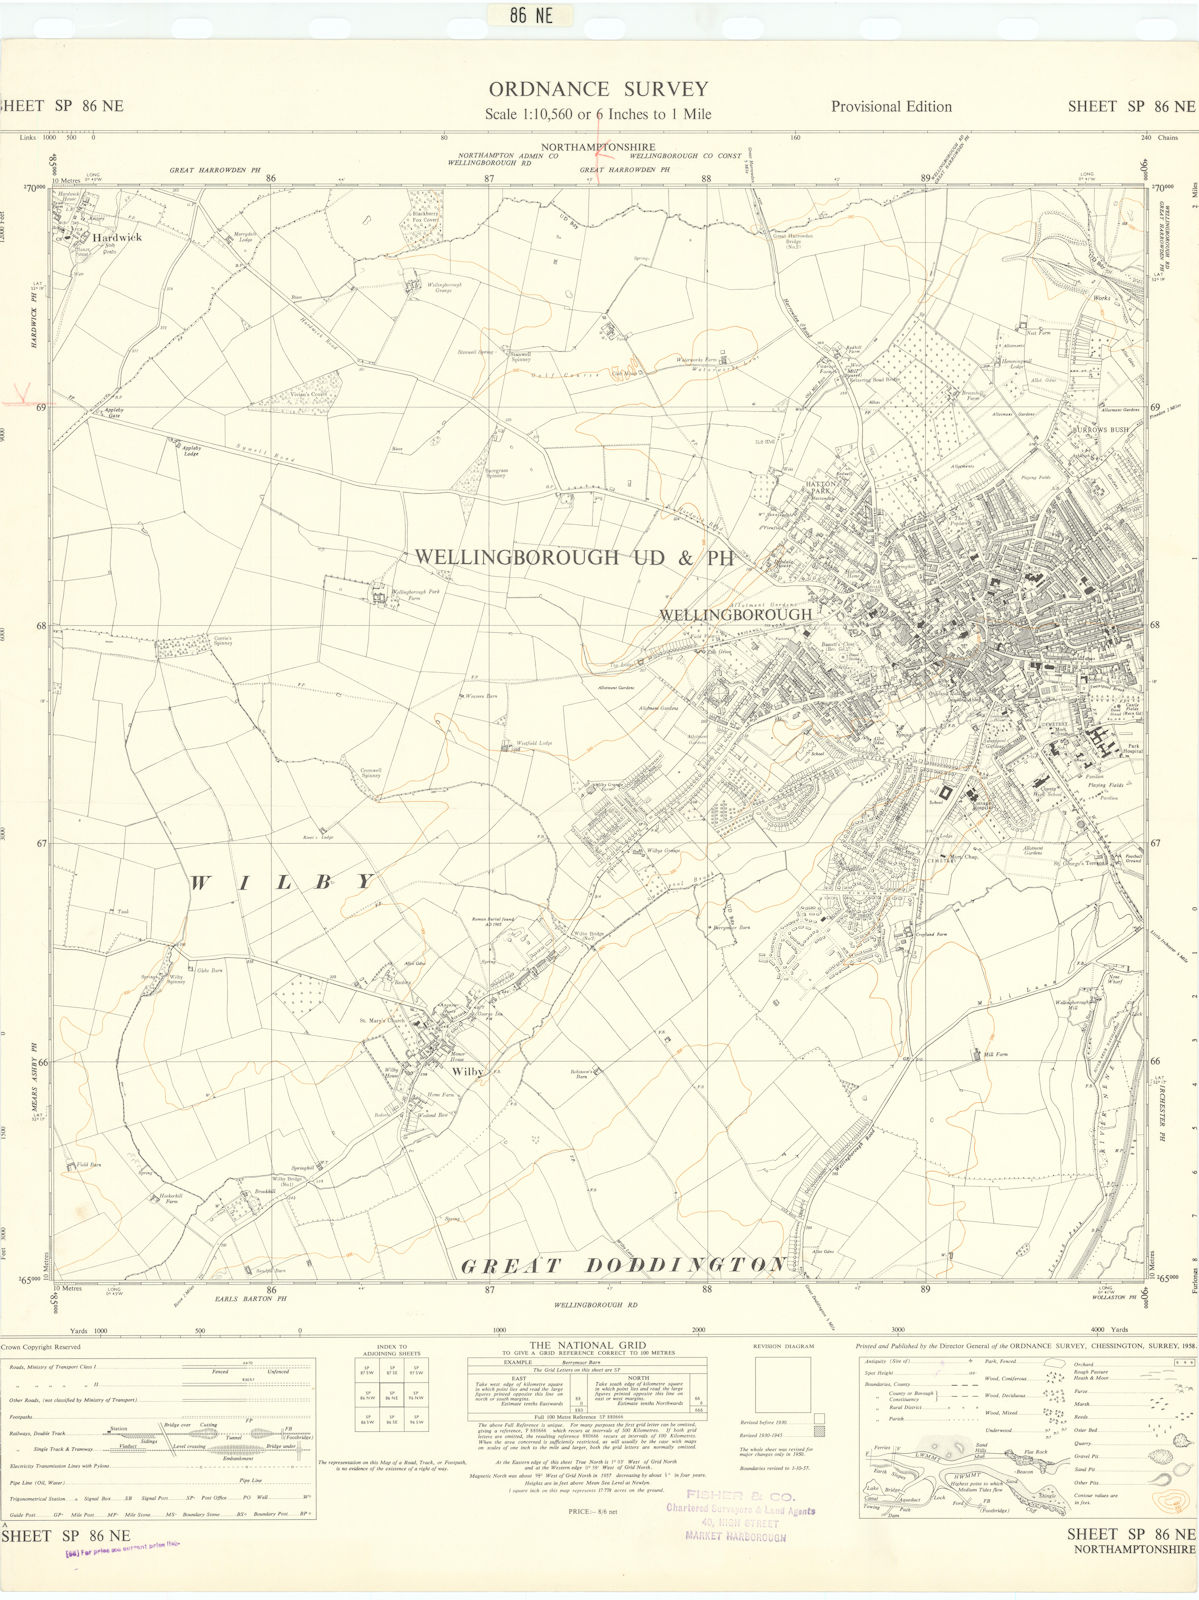 Ordnance Survey SP86NE Northamptonshire Wellingborough Hardwick Wilby 1958 map